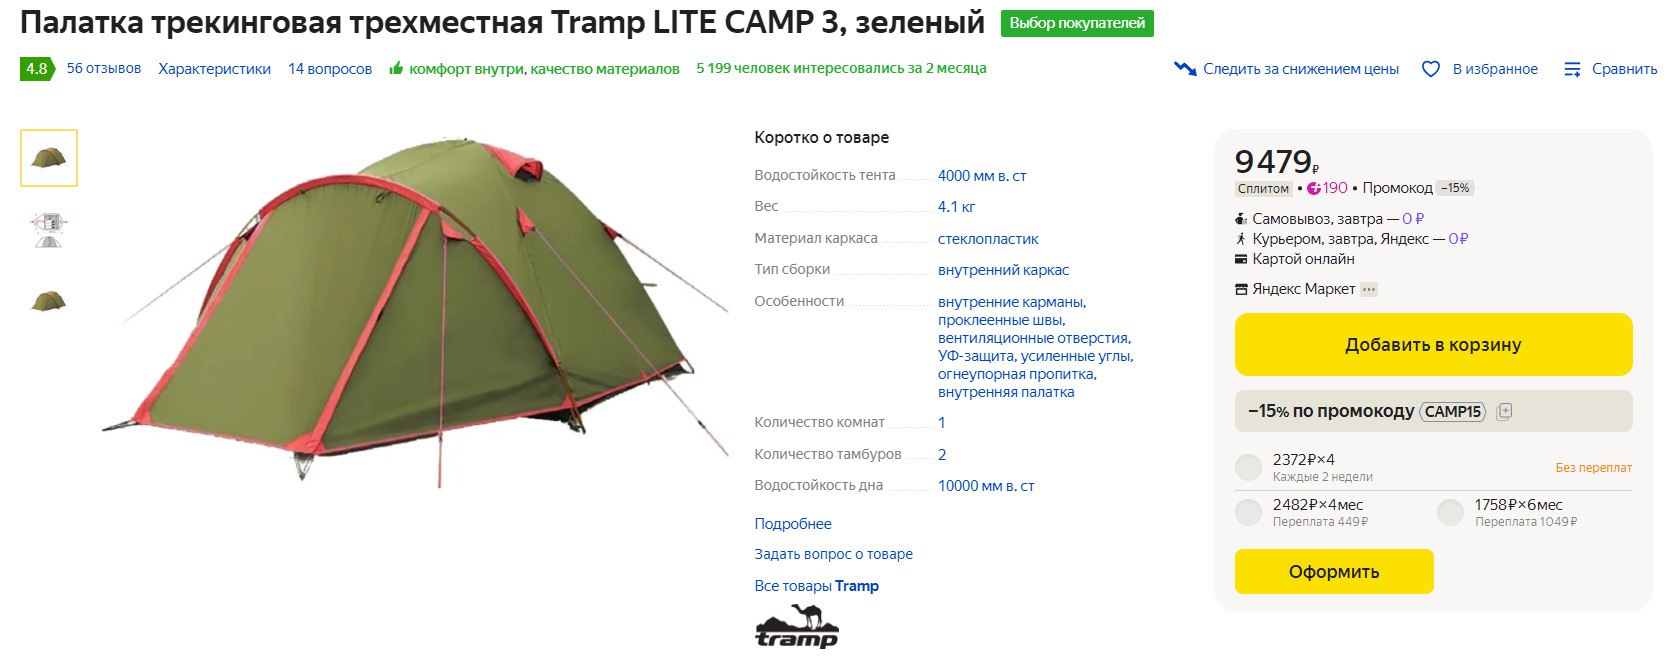 Палатка Tramp Camp 3. Tramp Lite палатка Camp 3. Палатка Tramp Lite Camp 2. Tramp Lite Camp 4.